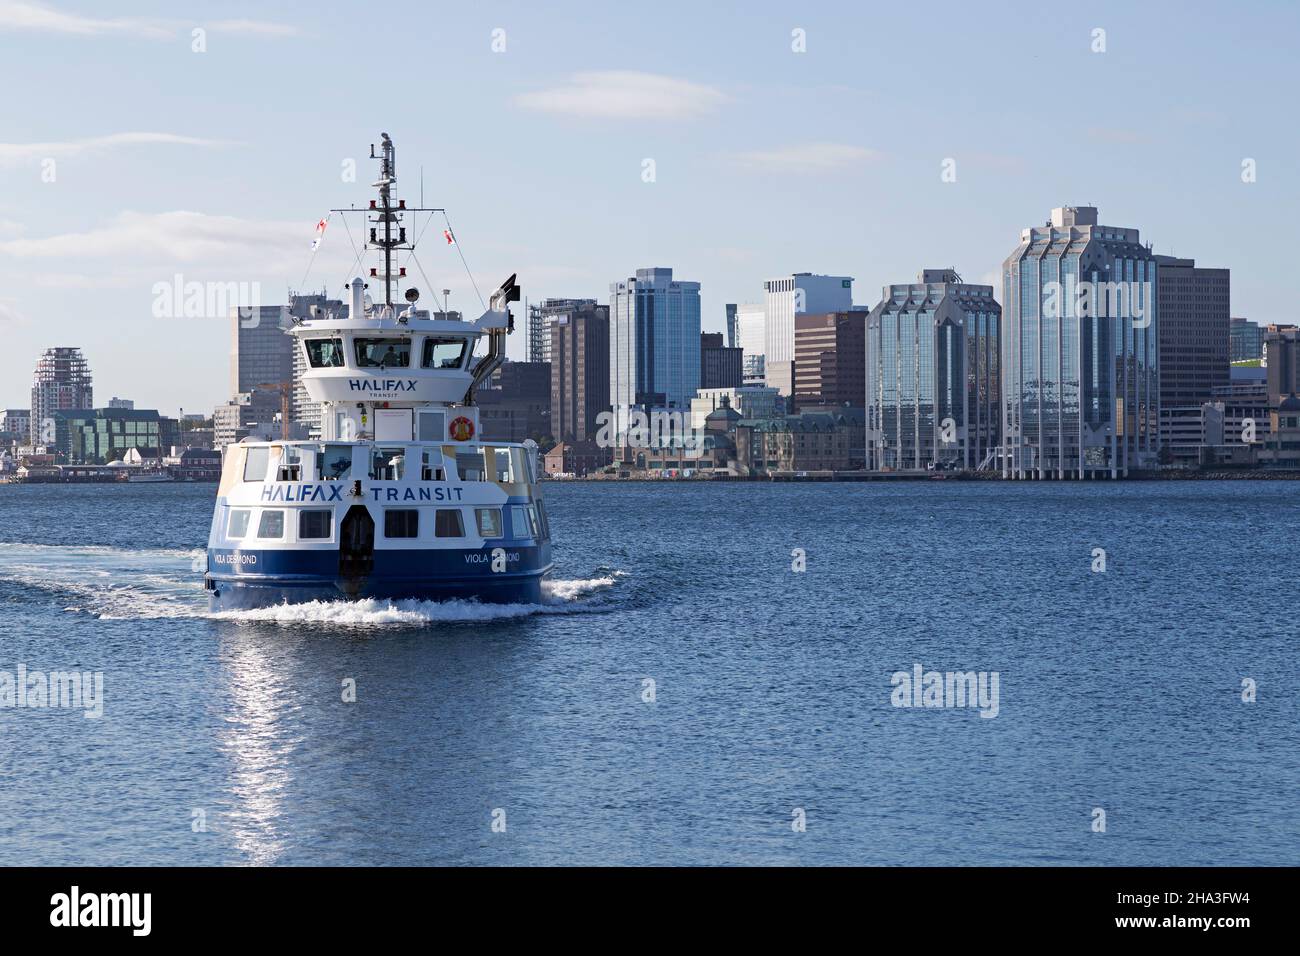 The Halifax-Dartmouth Frry crosses Halifax Harbour in Nova Scotia, Canada. Stock Photo